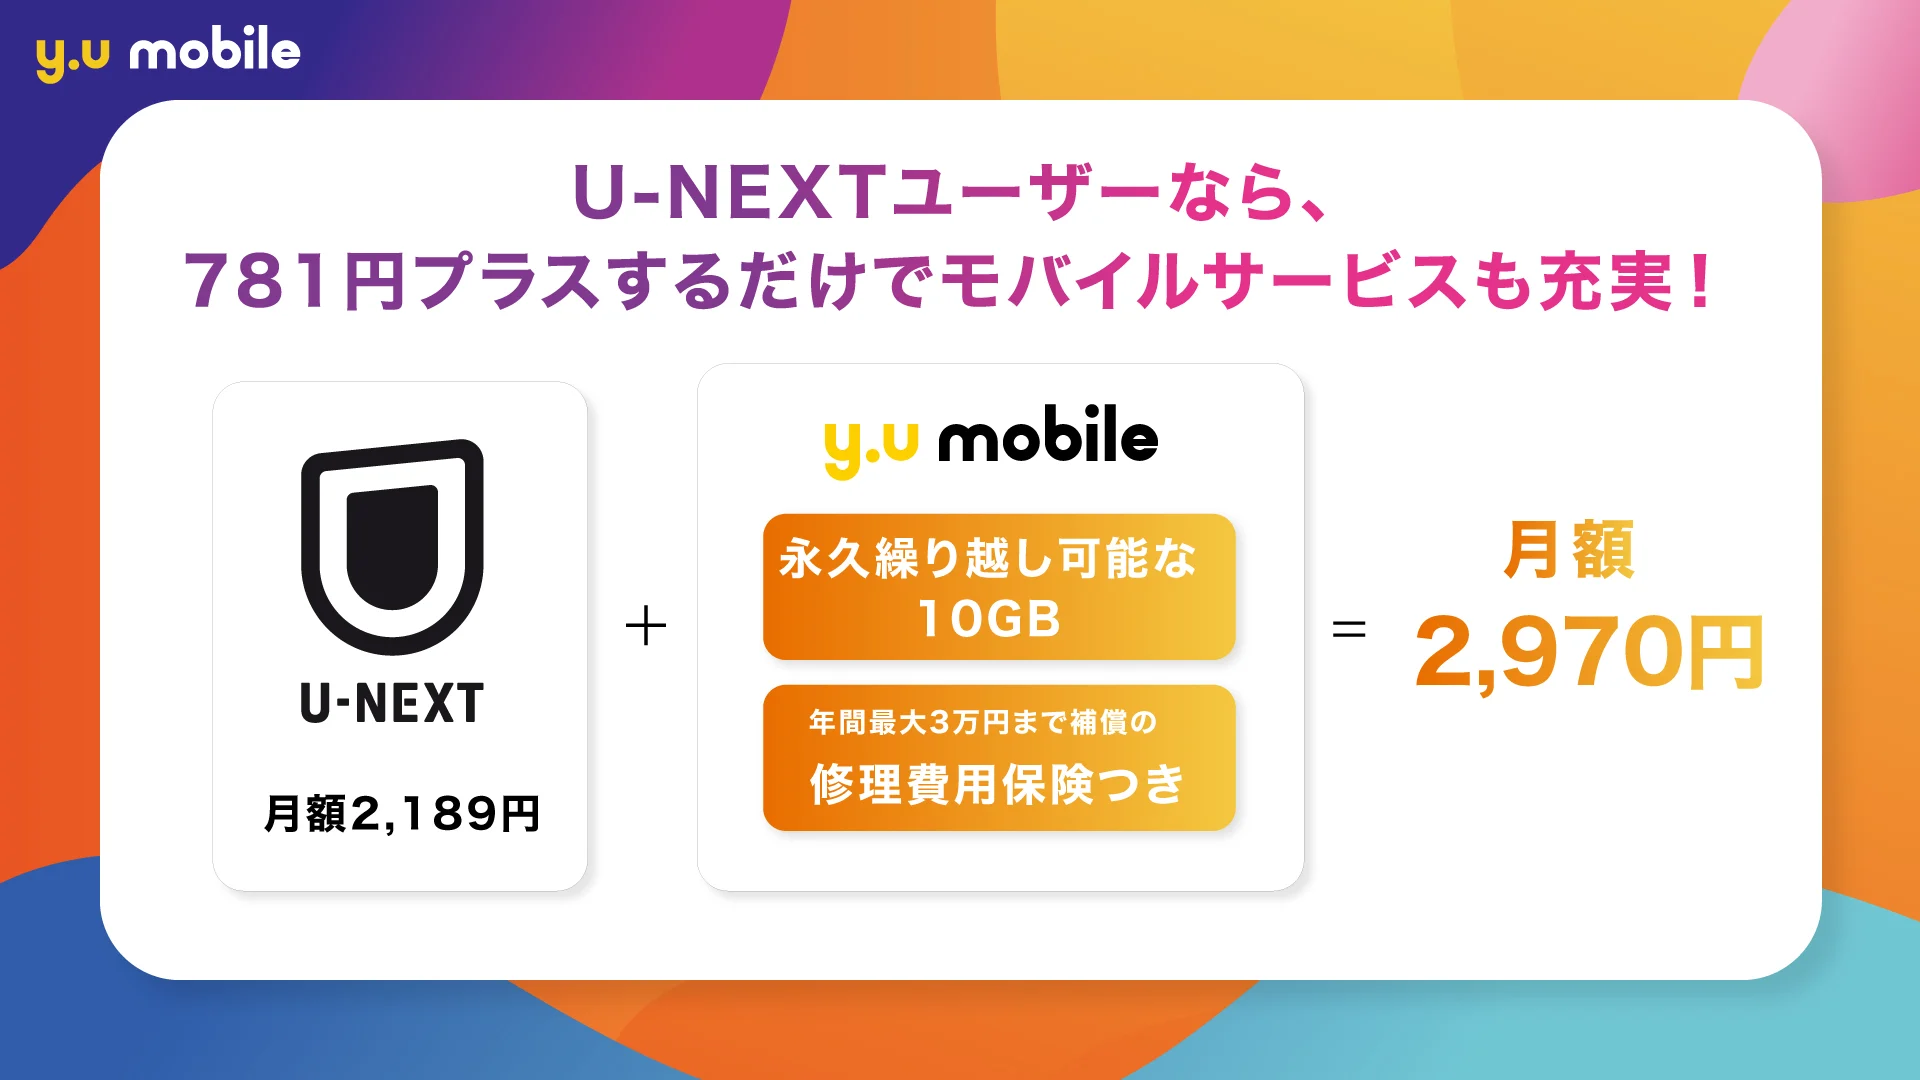 y.u mobile「シングル U-NEXT」U-NEXTユーザーの料金